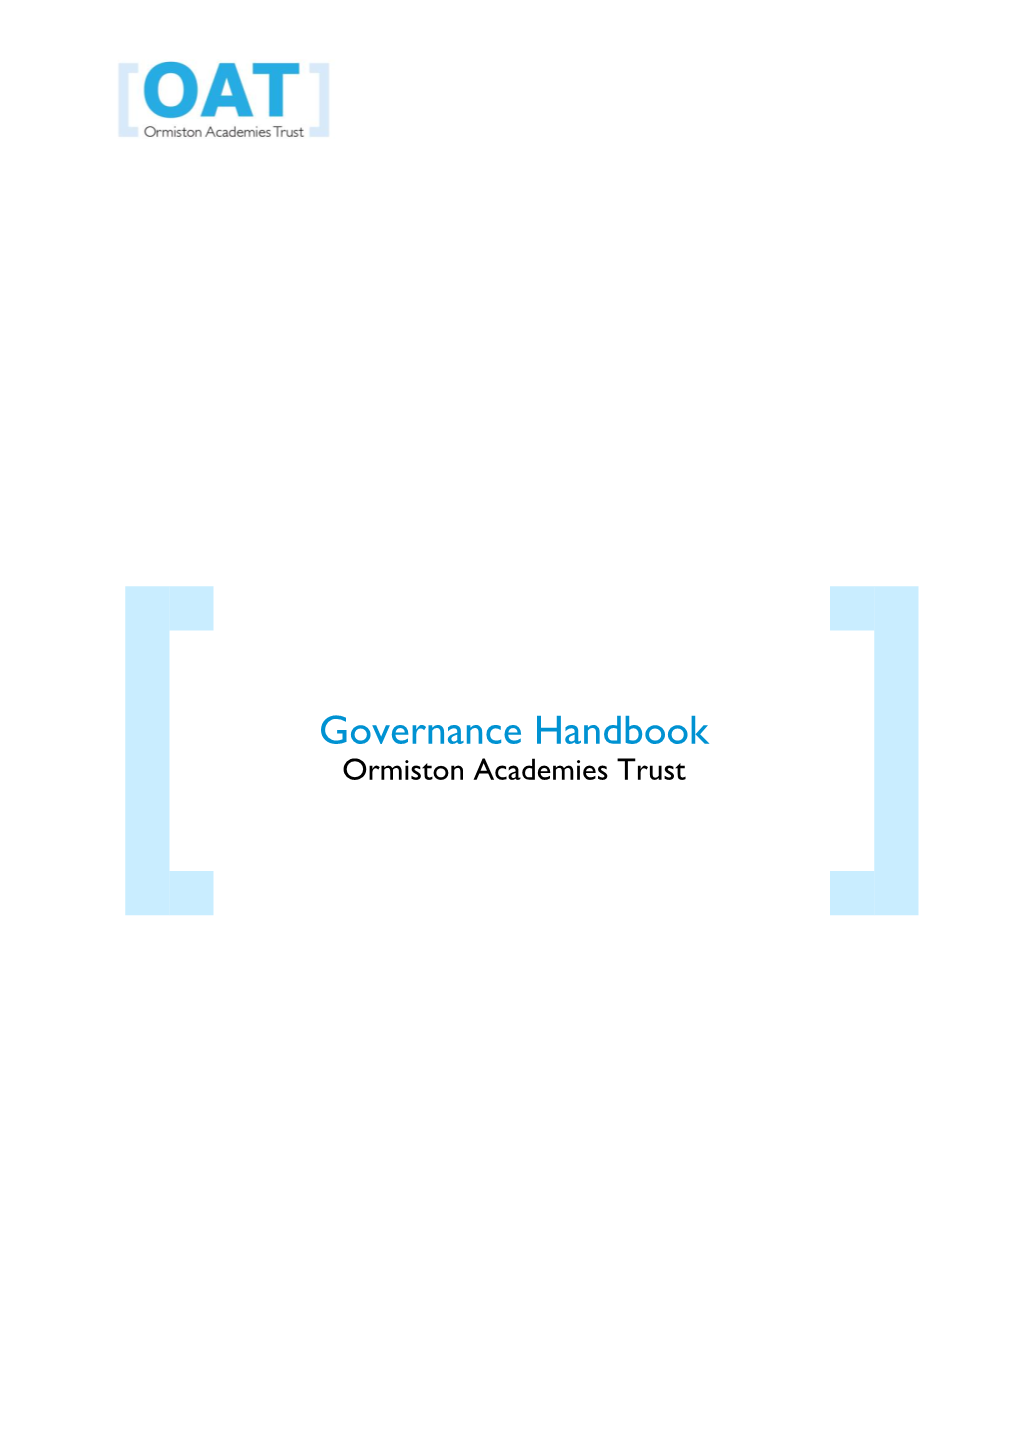 Governance Handbook Ormiston Academies Trust